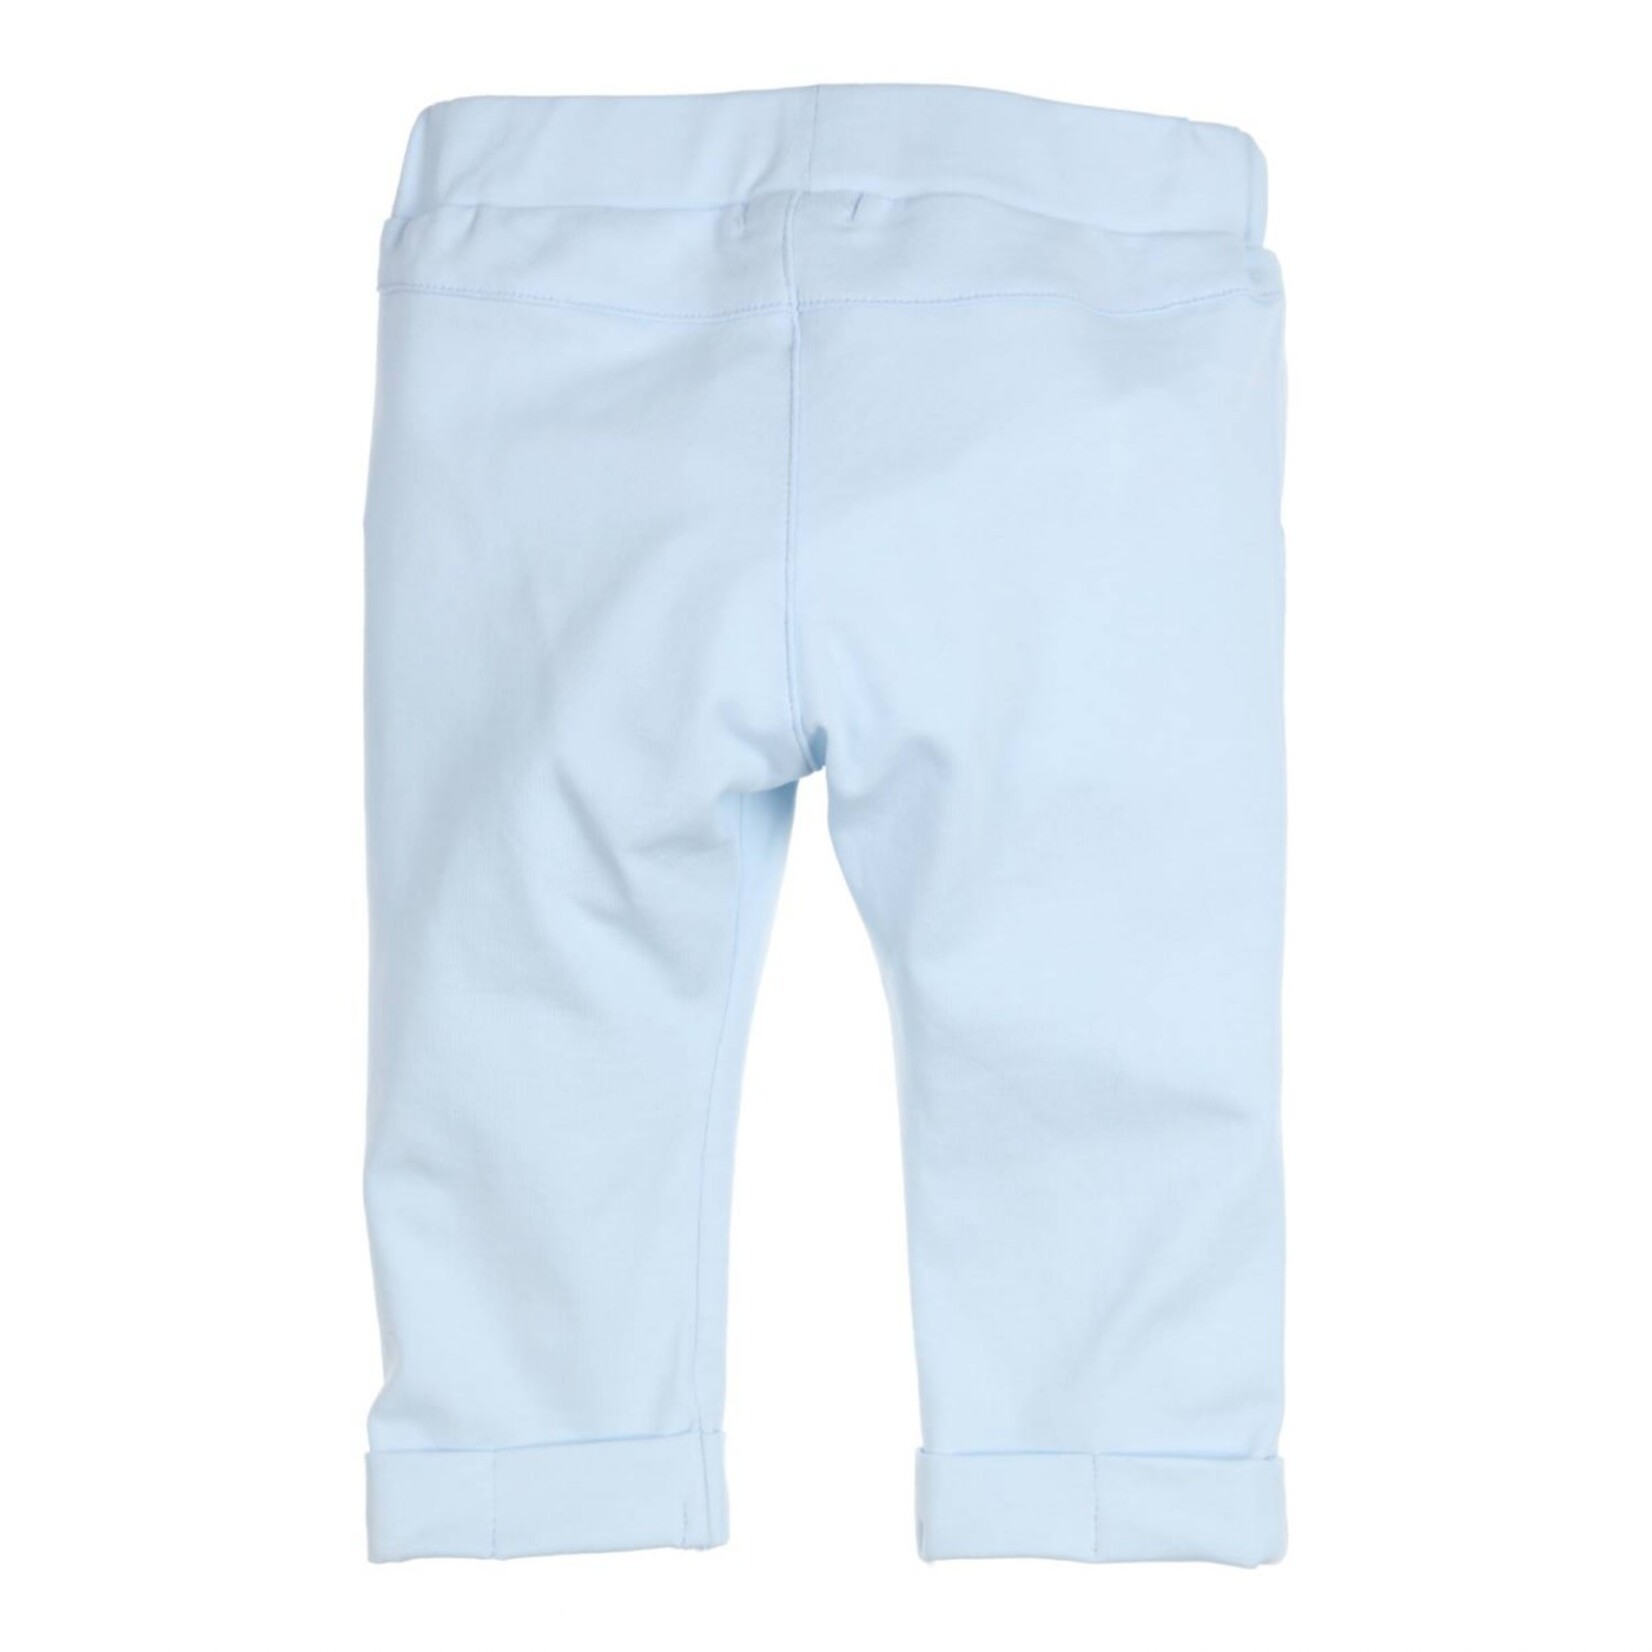 Gymp Trousers Aerobic_Light Blue_24